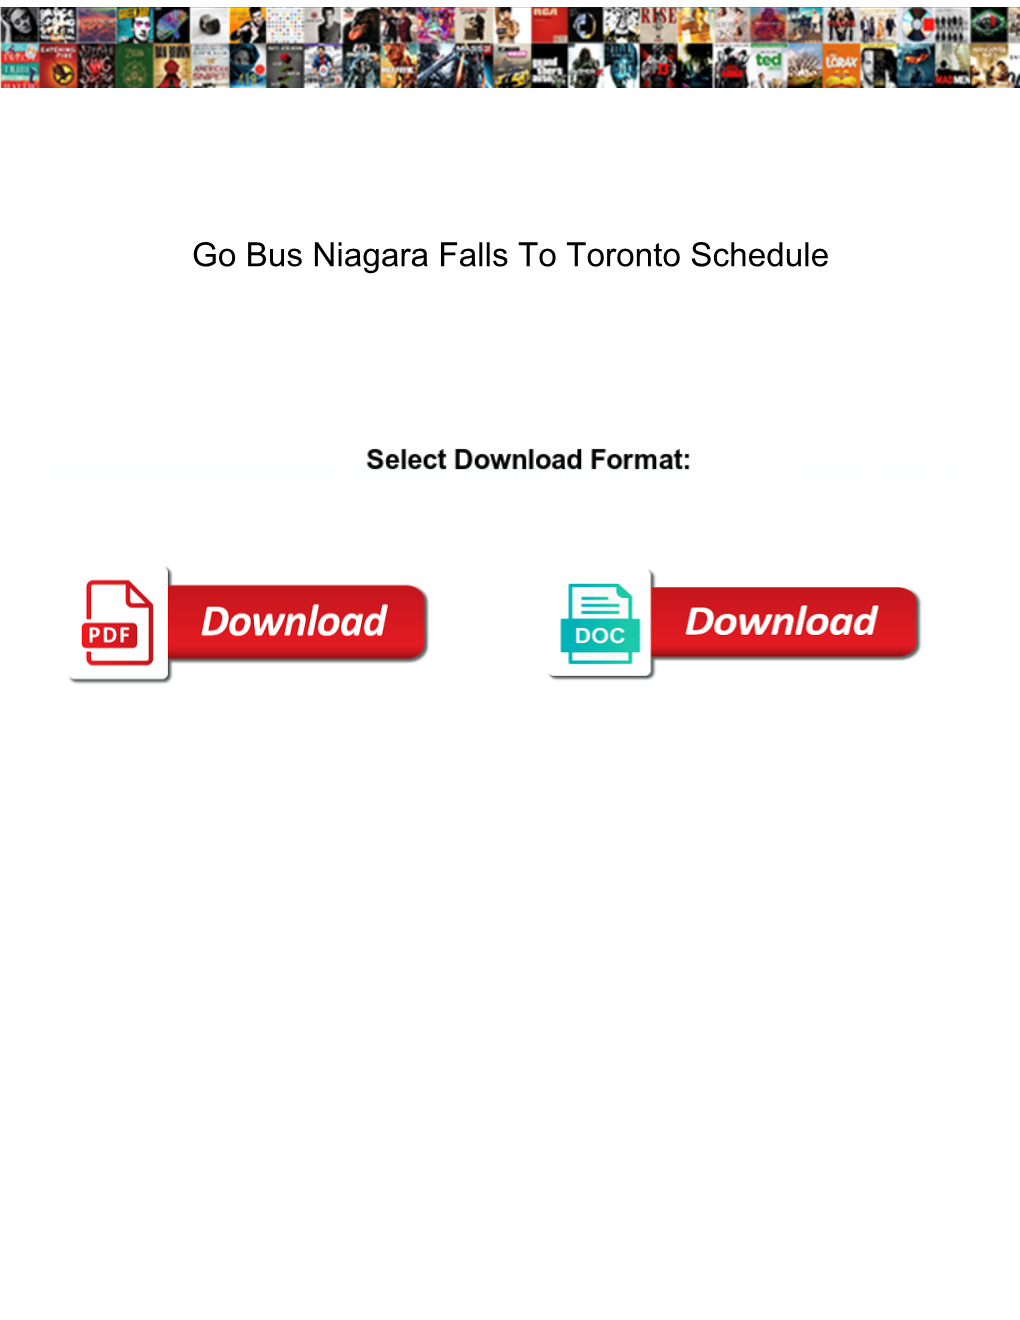 Go Bus Niagara Falls to Toronto Schedule